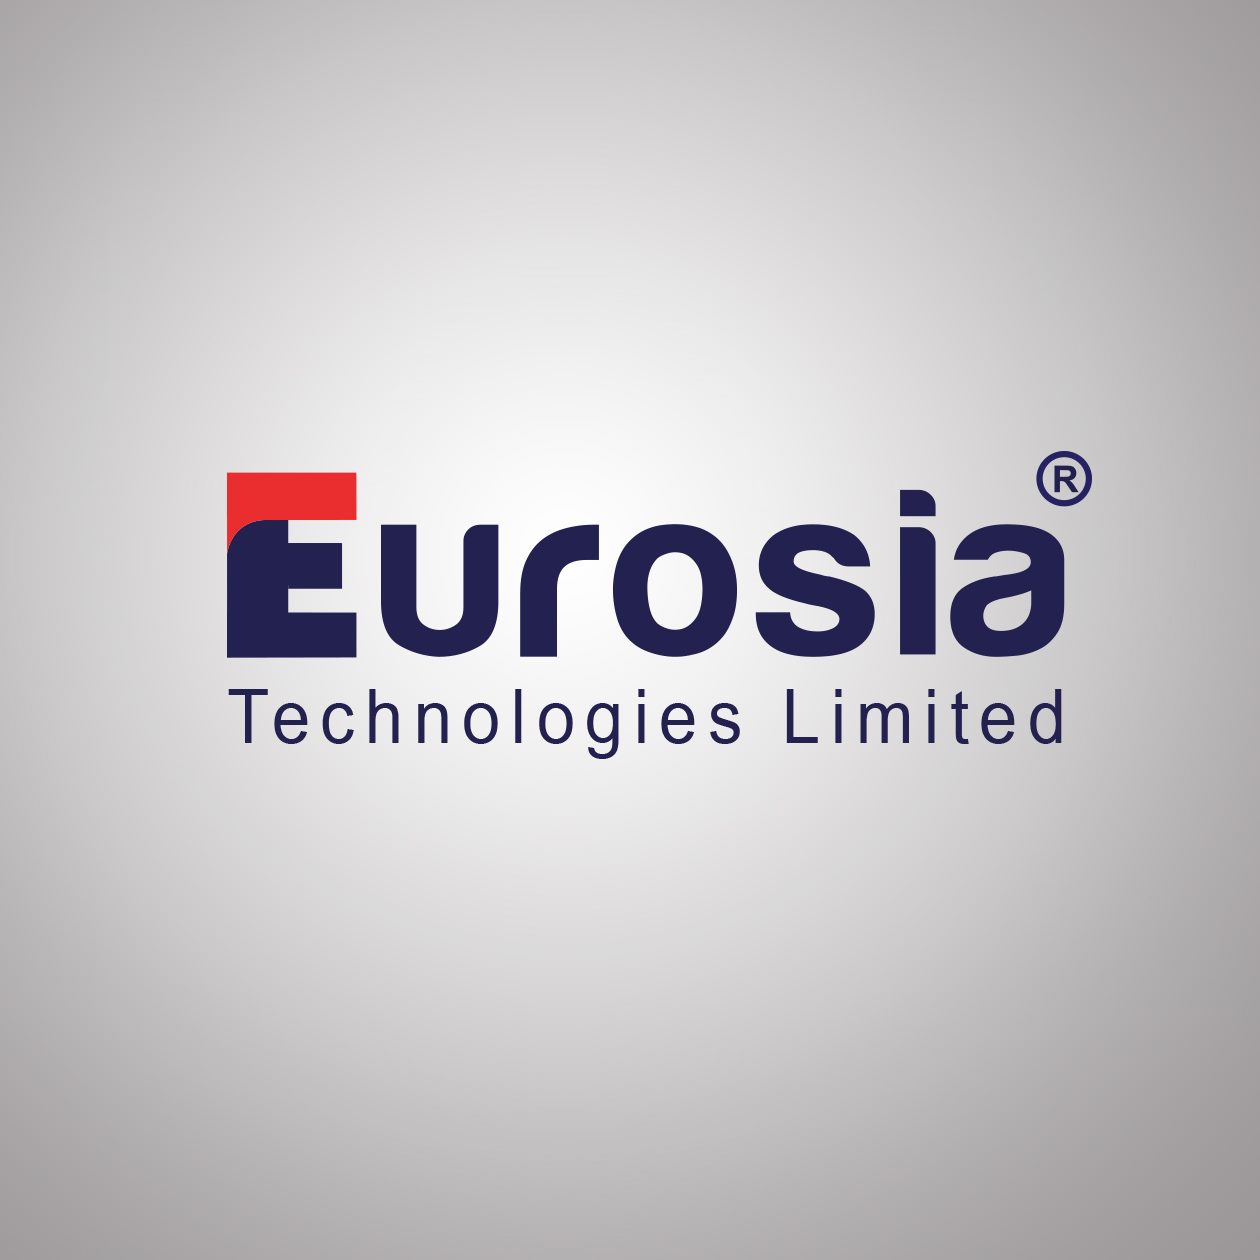 Eurosia Technologies Limited